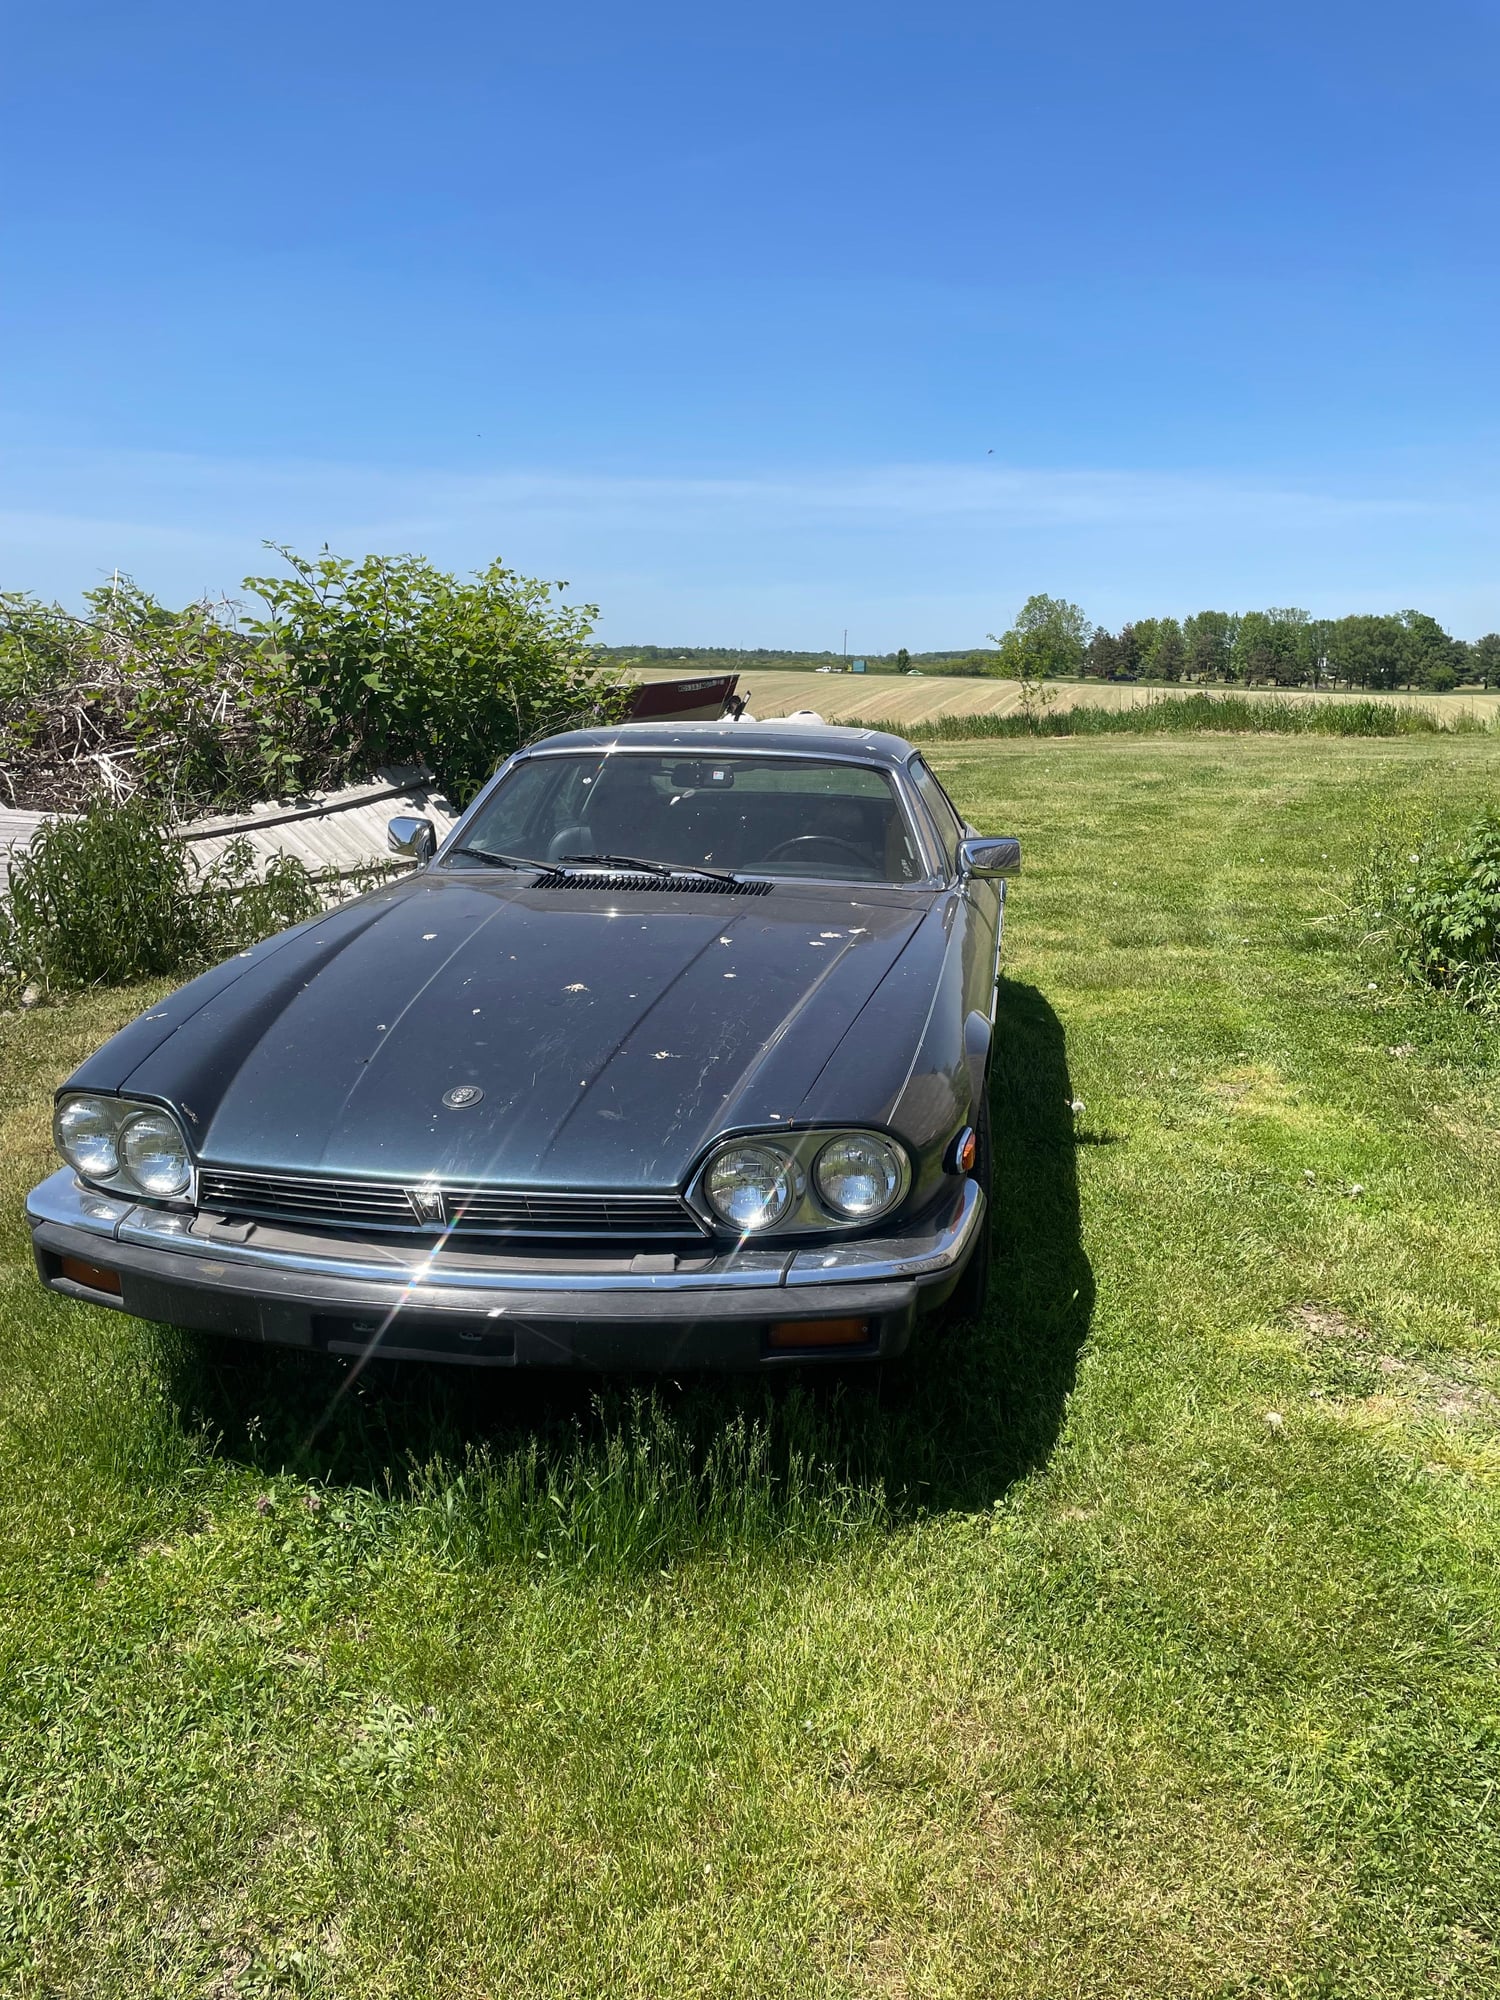 1985 Jaguar XJS - 1985 XJS - Used - VIN Sajnv5848fc119337 - 43,176 Miles - 12 cyl - 2WD - Automatic - Coupe - Blue - Wayland, MI 49348, United States